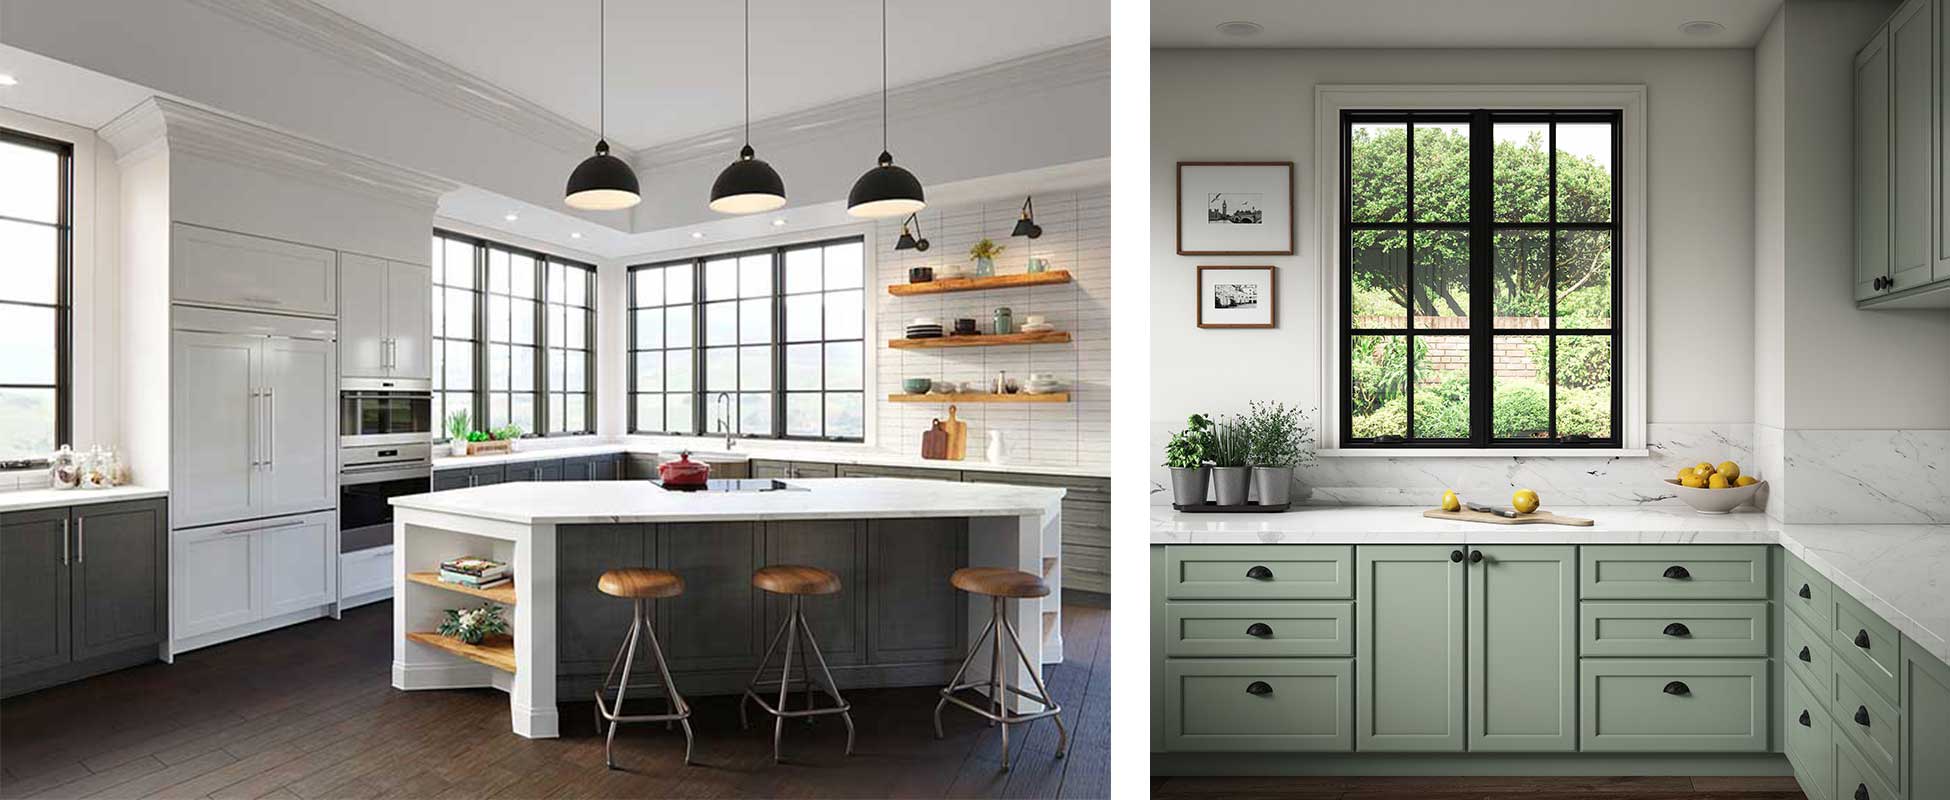 Marvin Elevate Casement windows in a contemporary kitchen and Marvin Elevate Casement windows with black interior in a kitchen